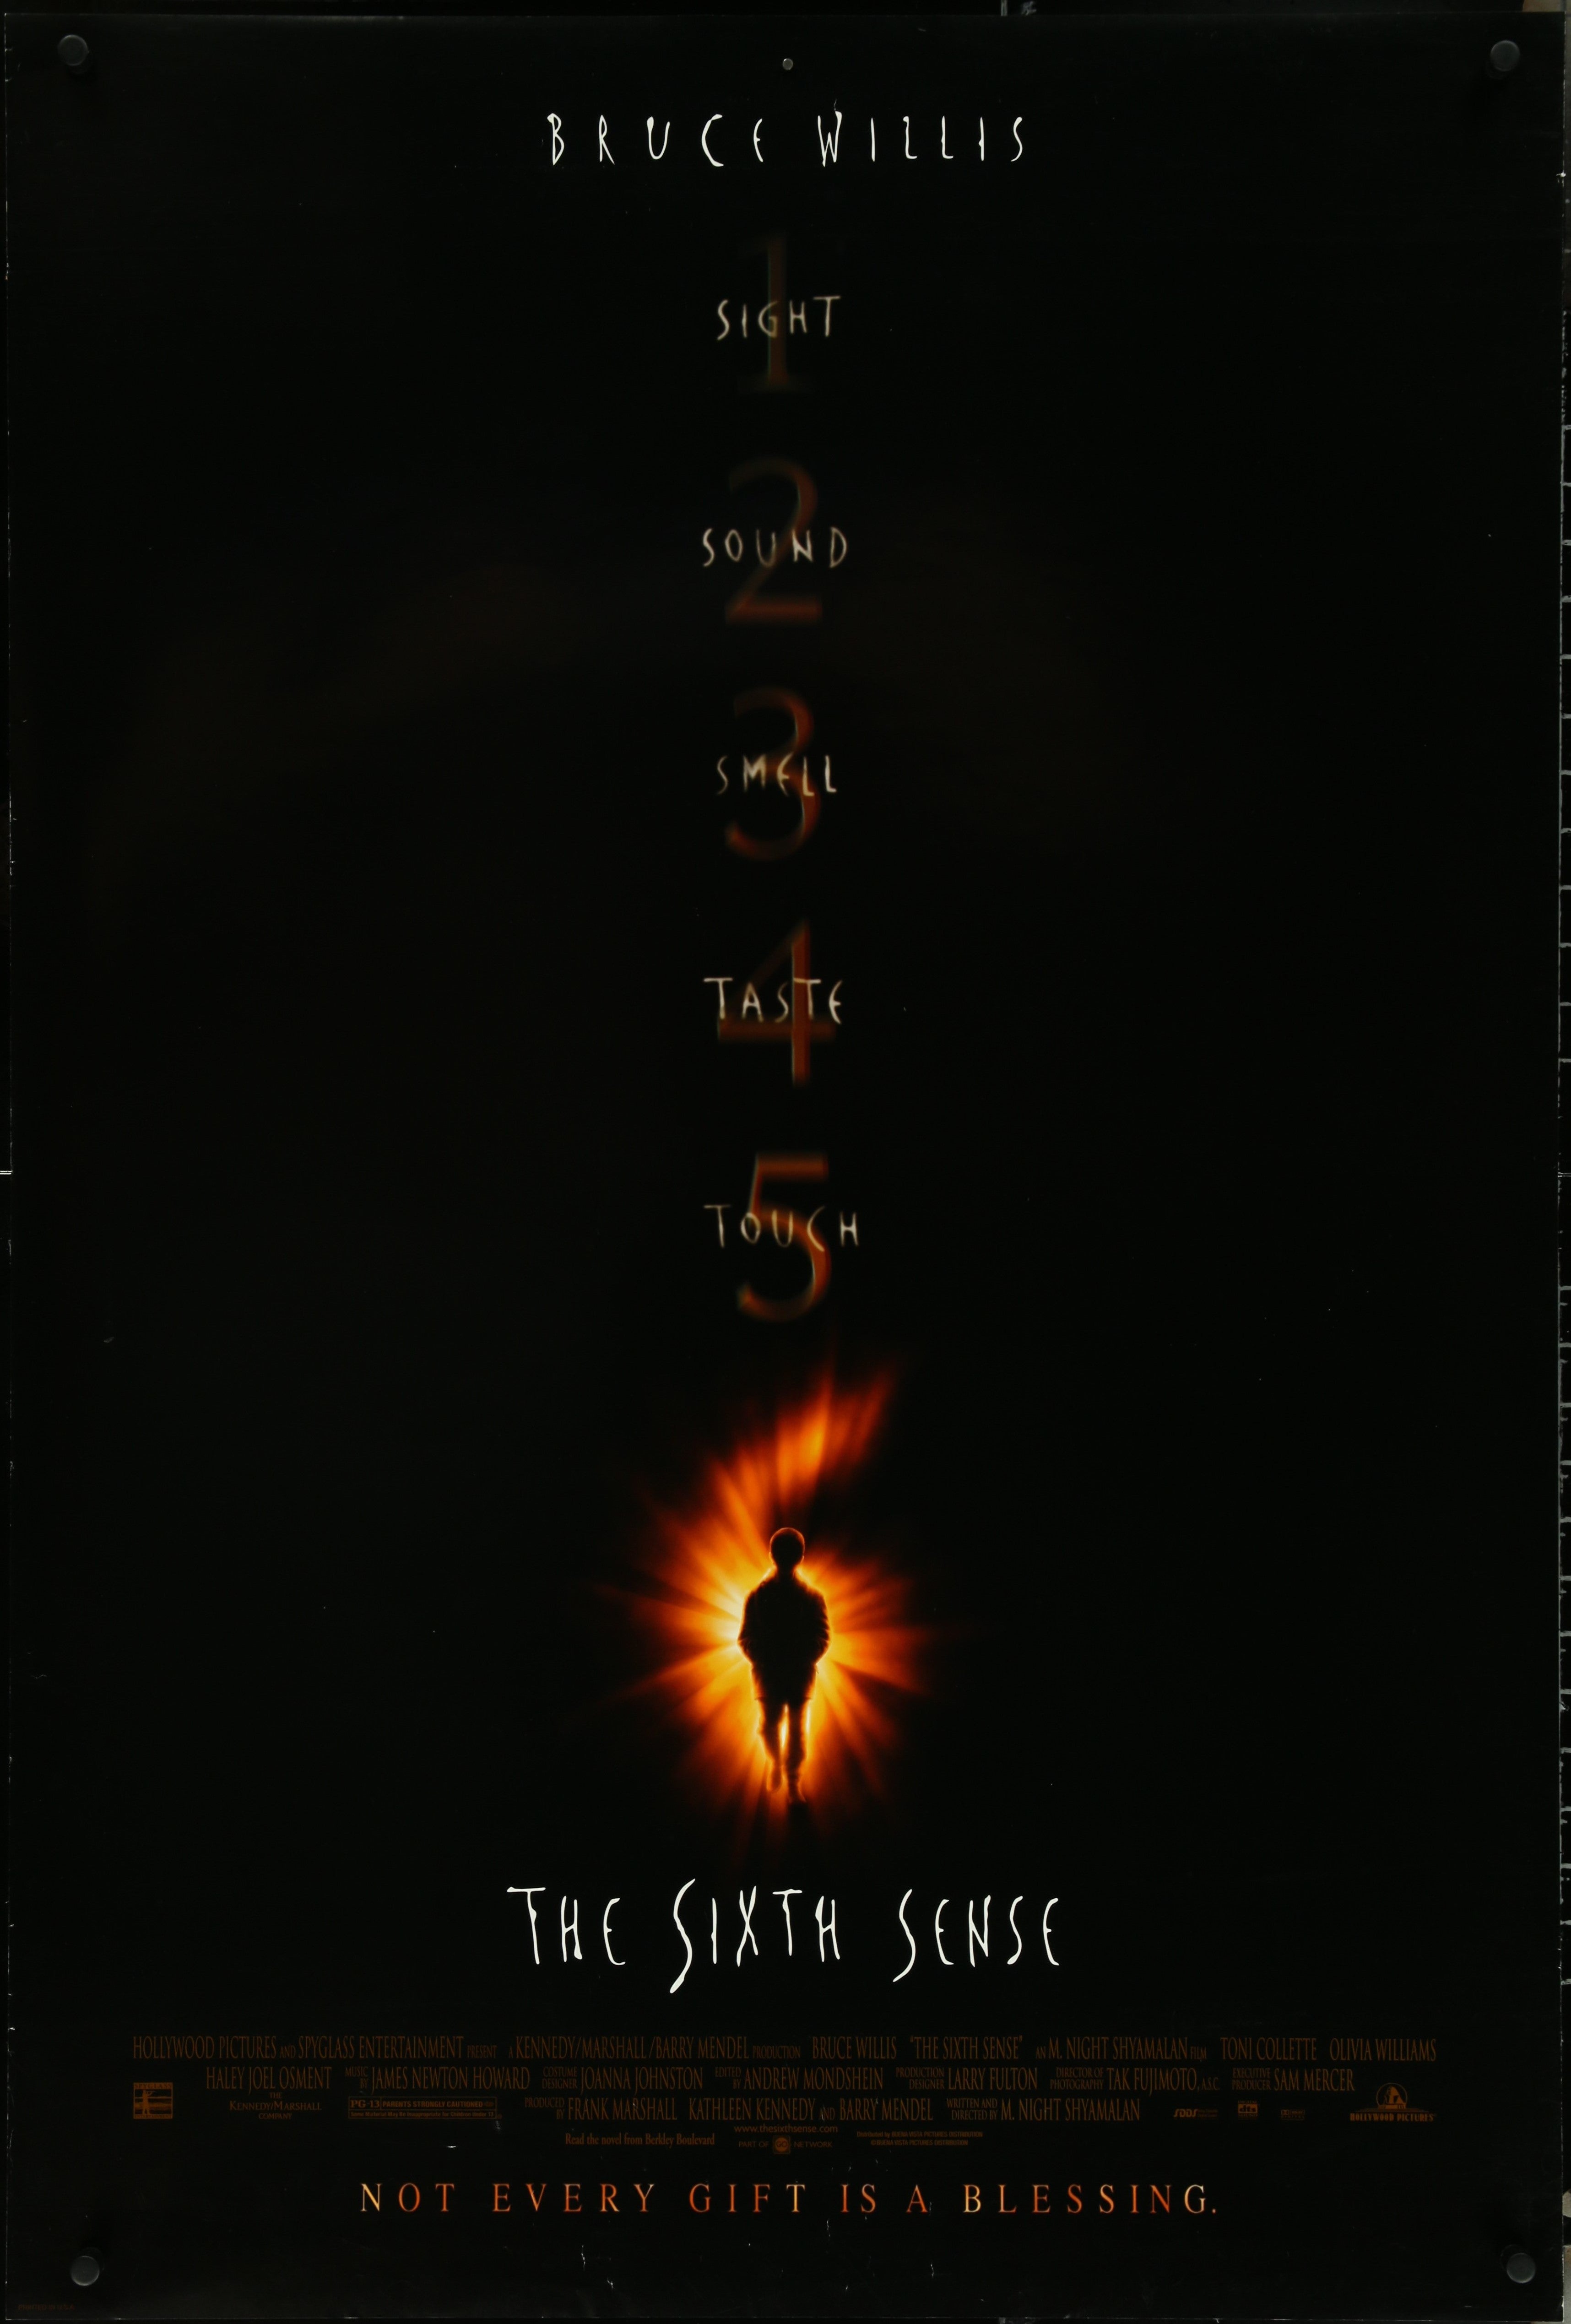 THE SIXTH SENSE (1999)